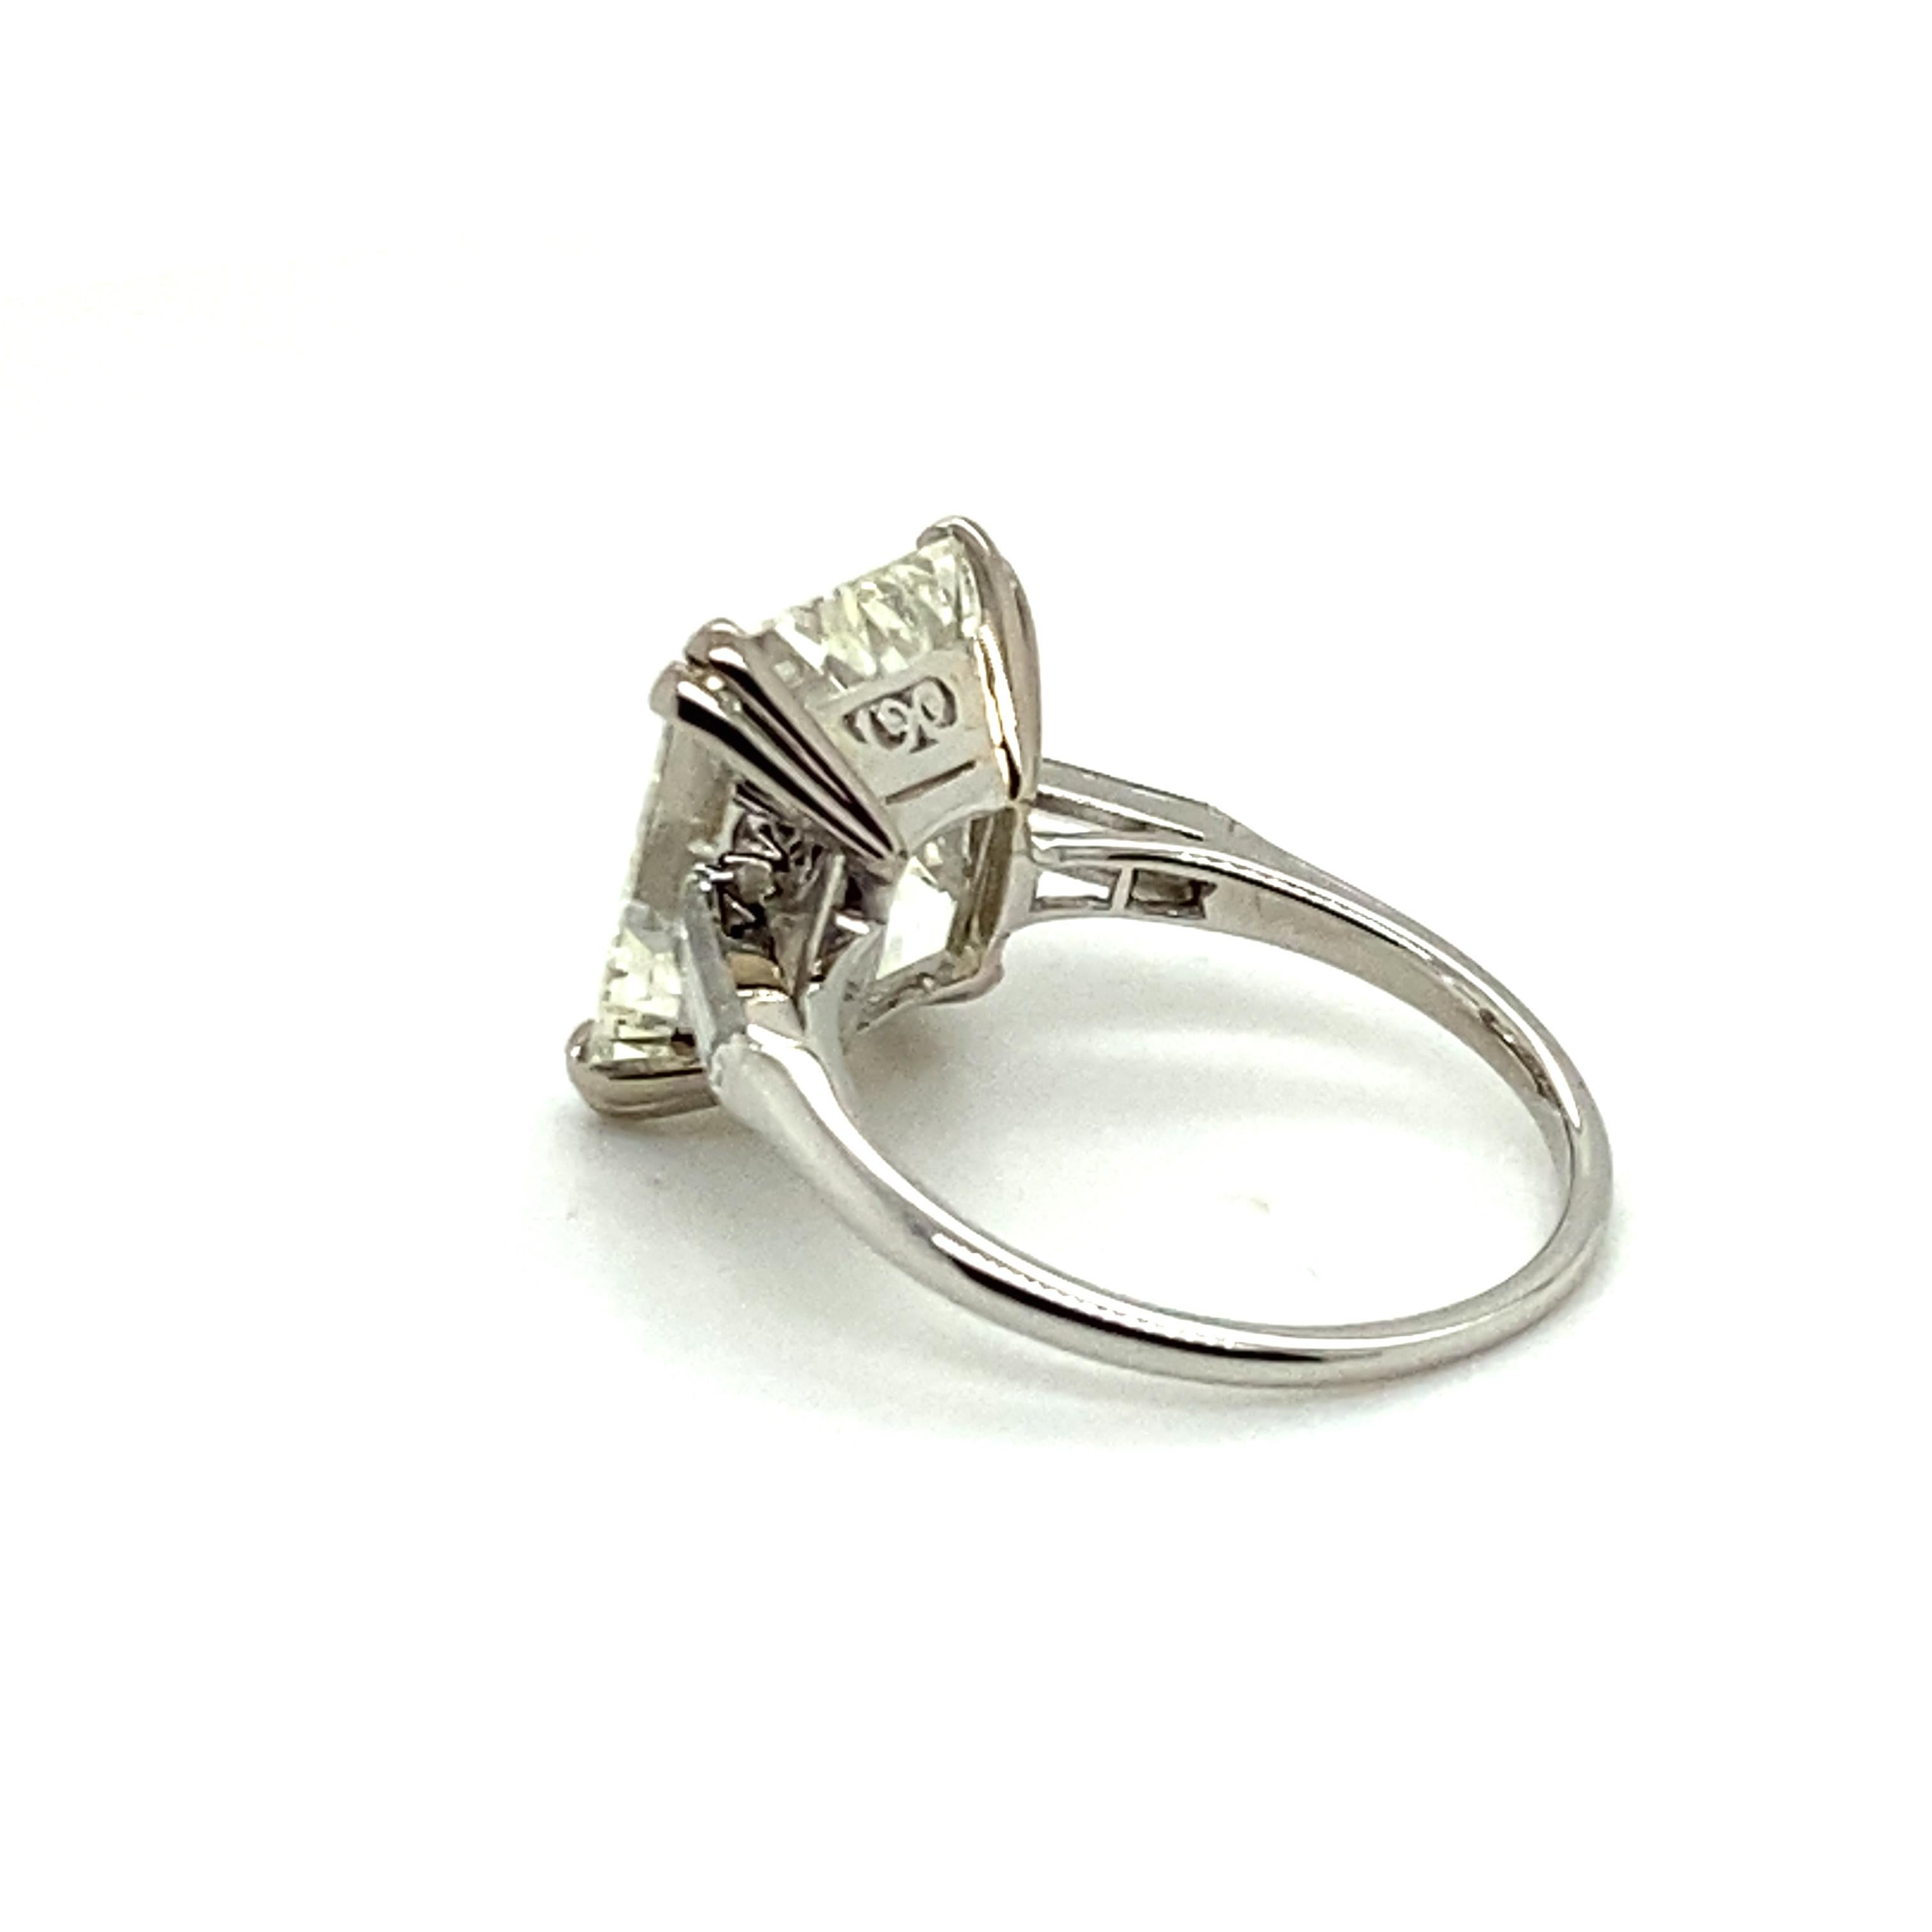 Stunning 7.34 Ct GIA Certified Emerald-Cut Diamond Ring in Platinum 950 3